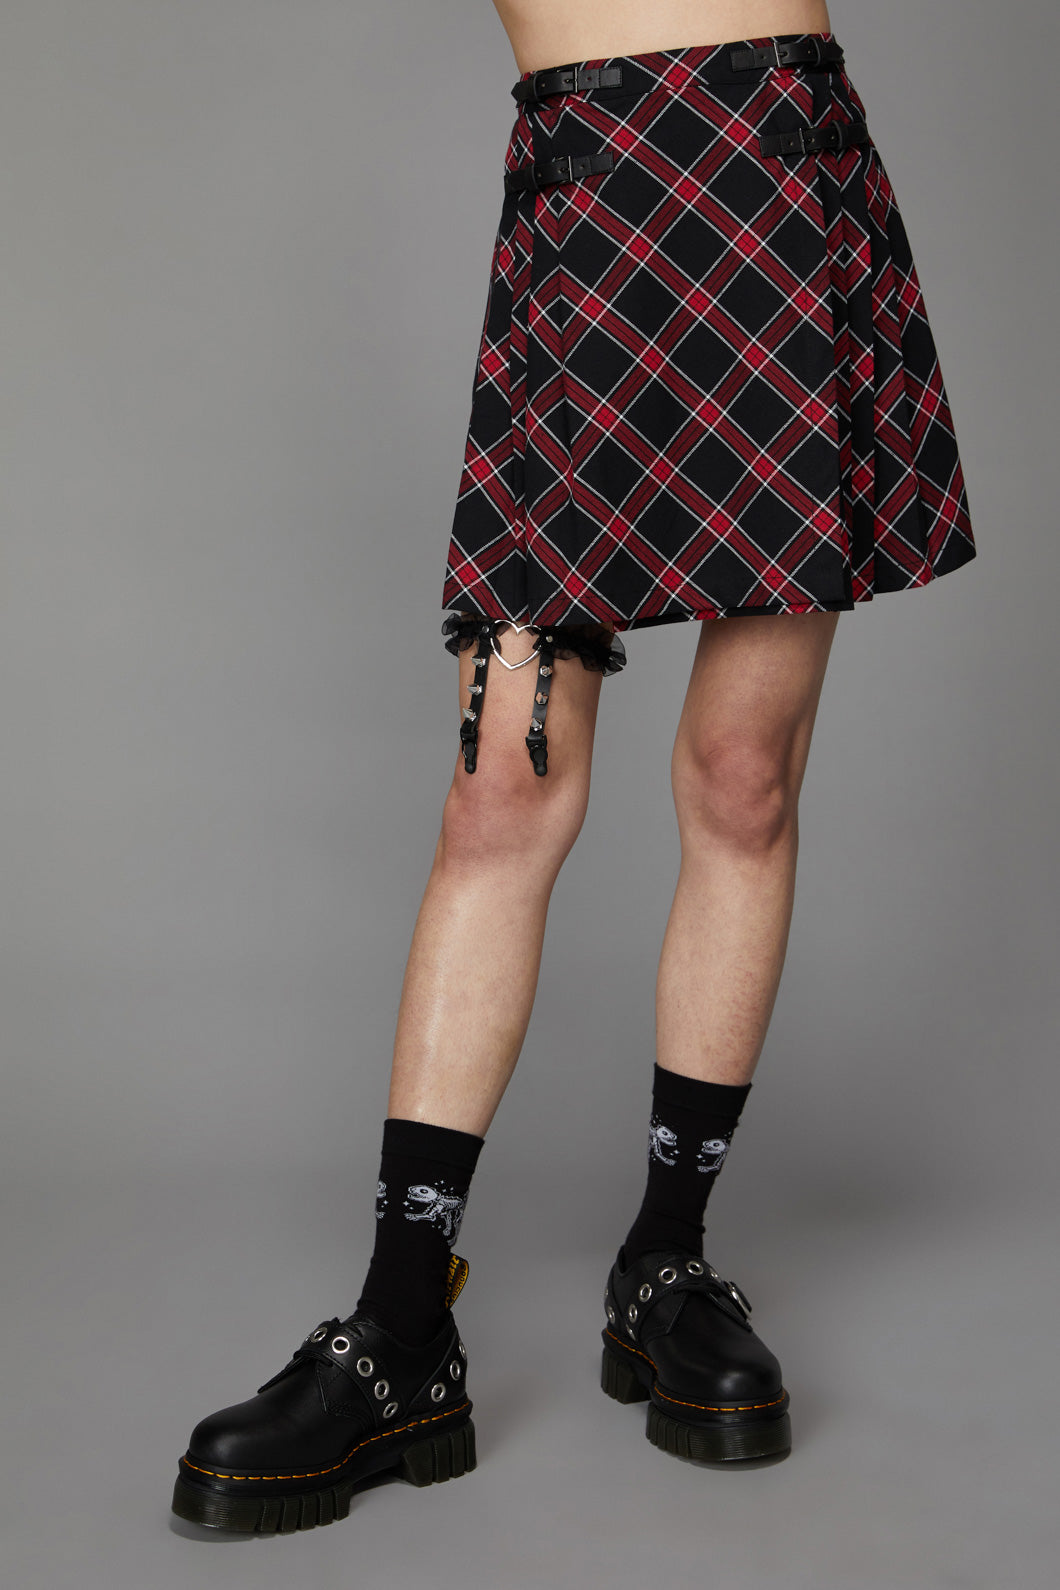 Batty Goth Tartan Skirt